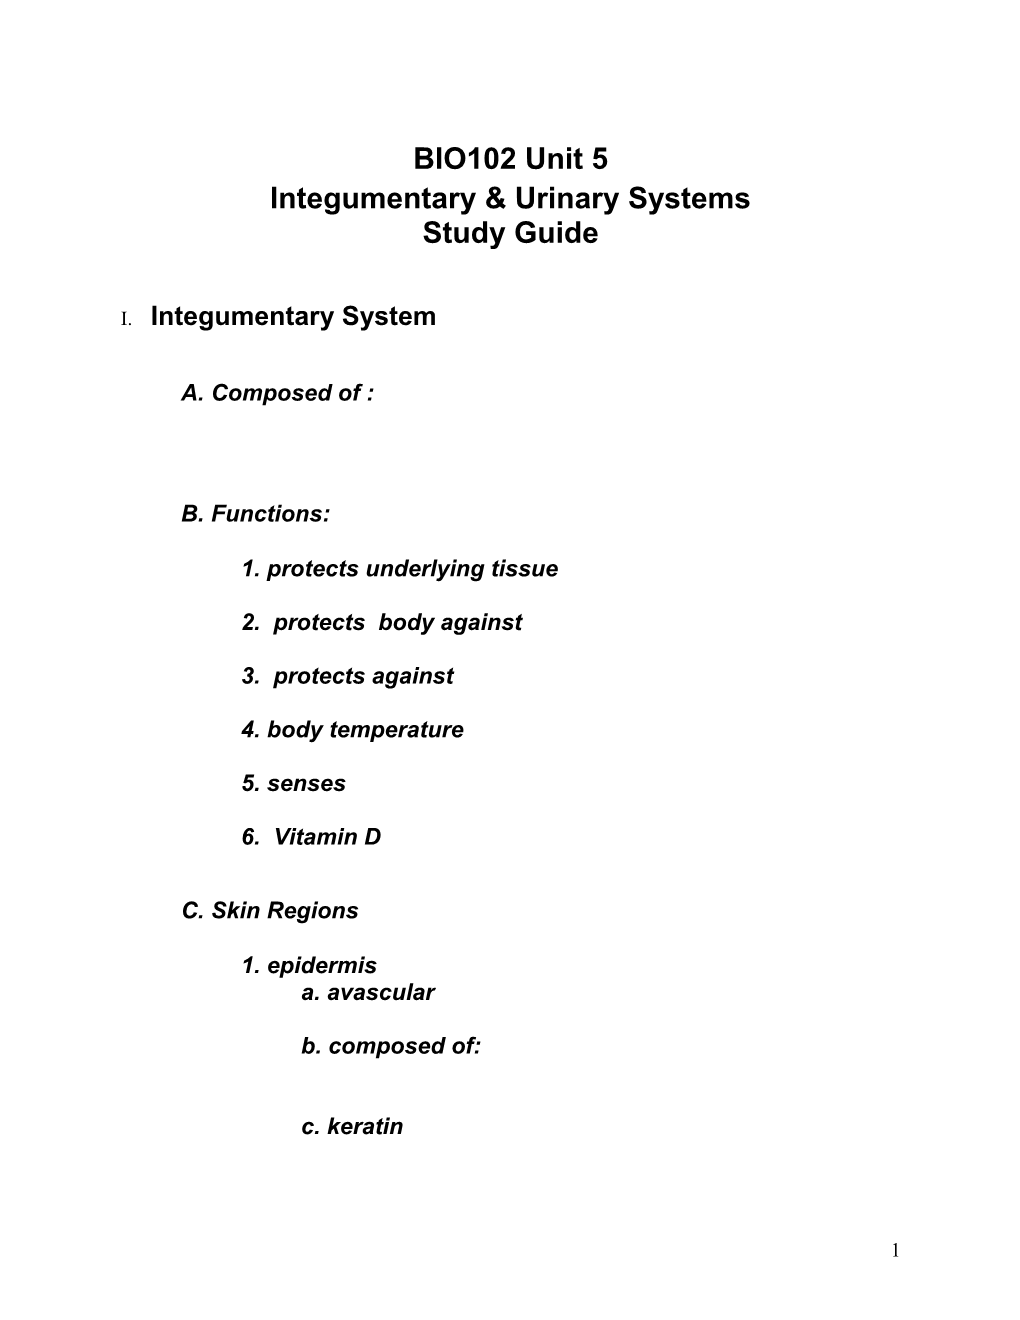 Integumentary & Urinary Systems